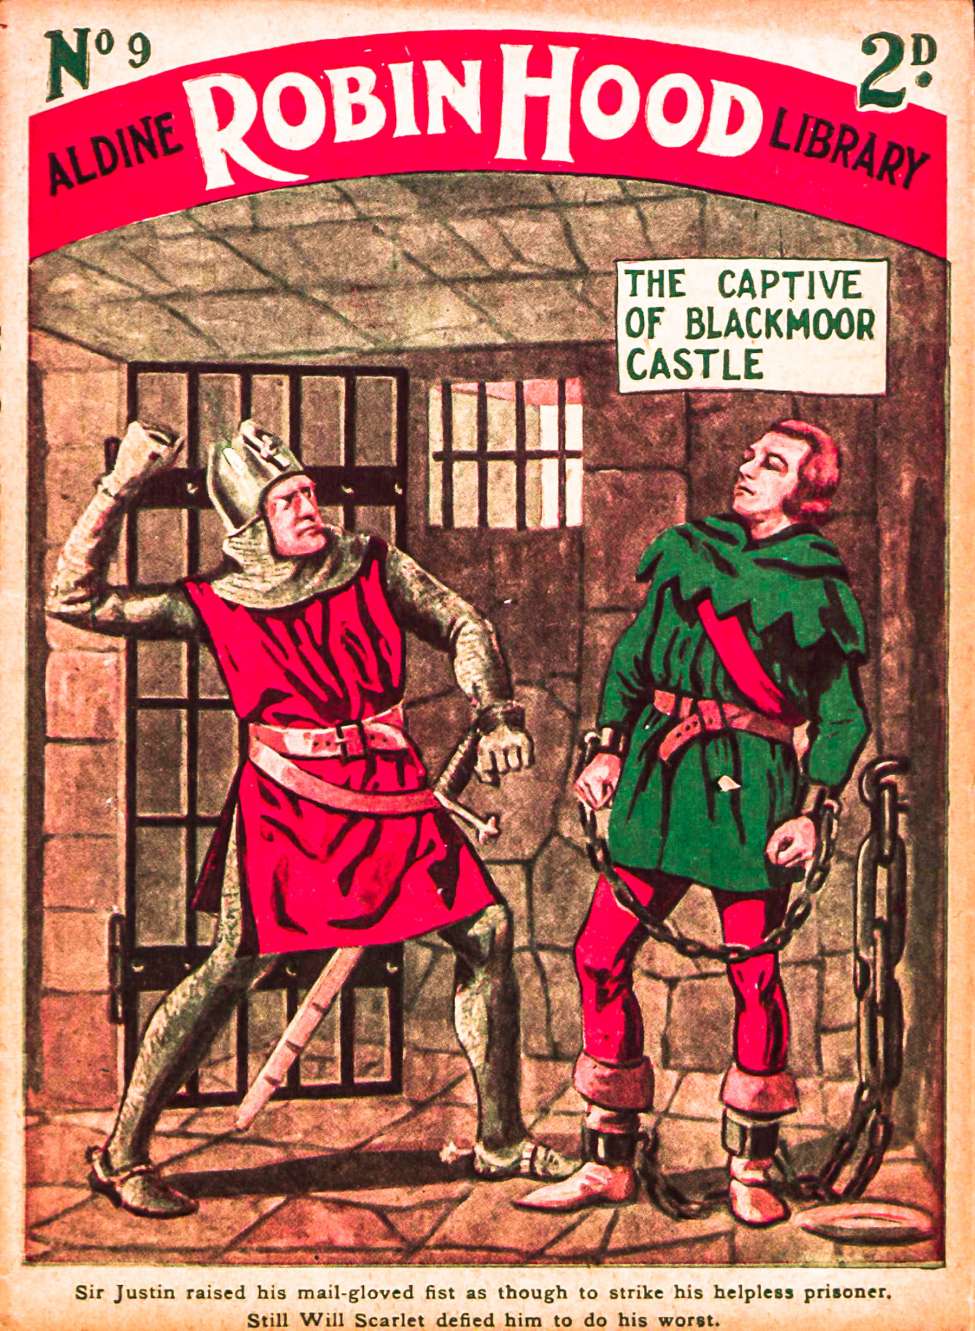 Book Cover For Aldine Robin Hood Library 9 - The Captive of Blackmoor Castle